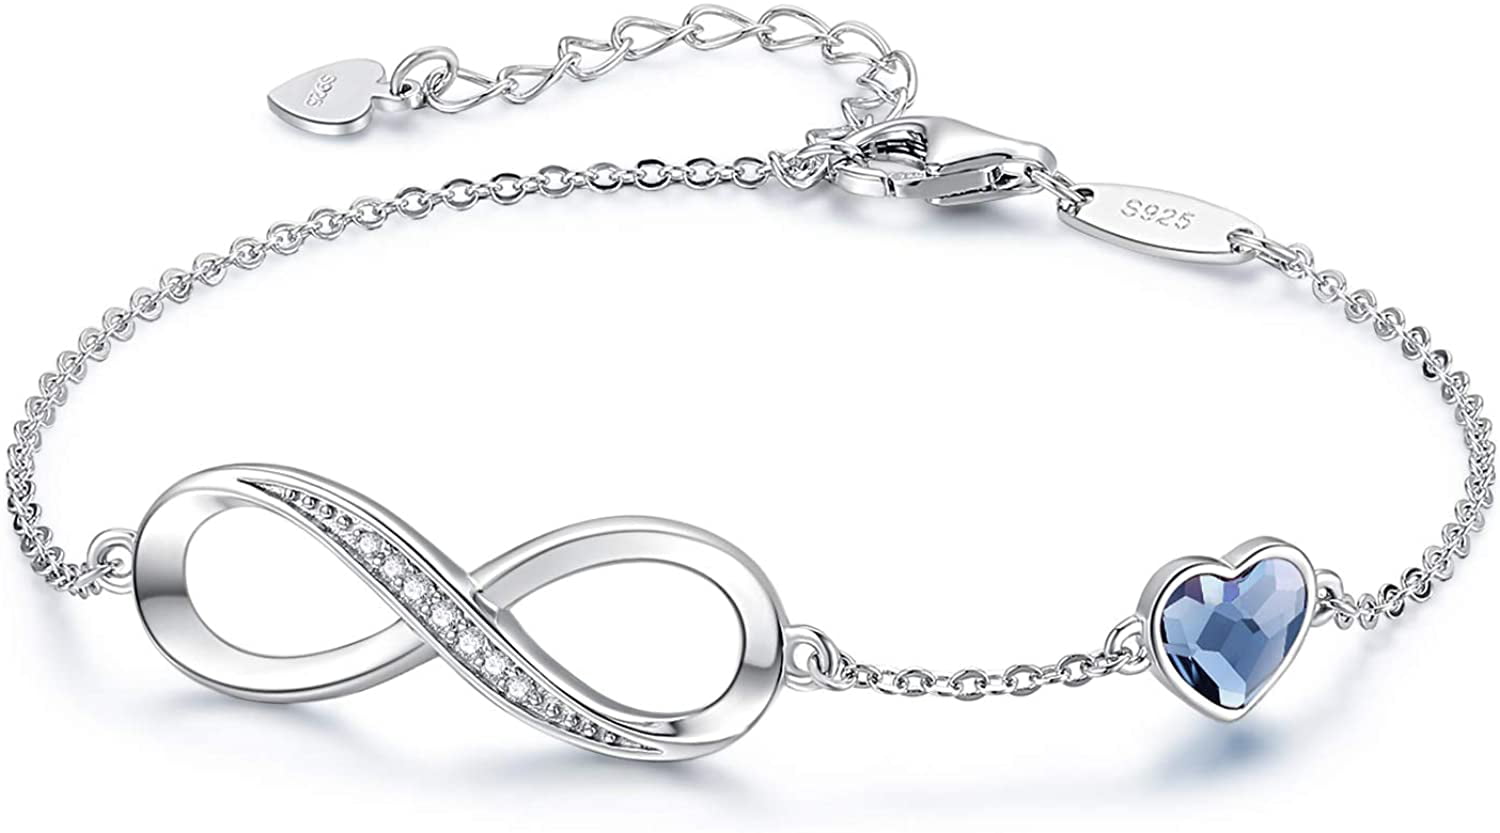 Personalised Silver Crystal Family Charm Bracelet Gift Bag Birthday Christmas